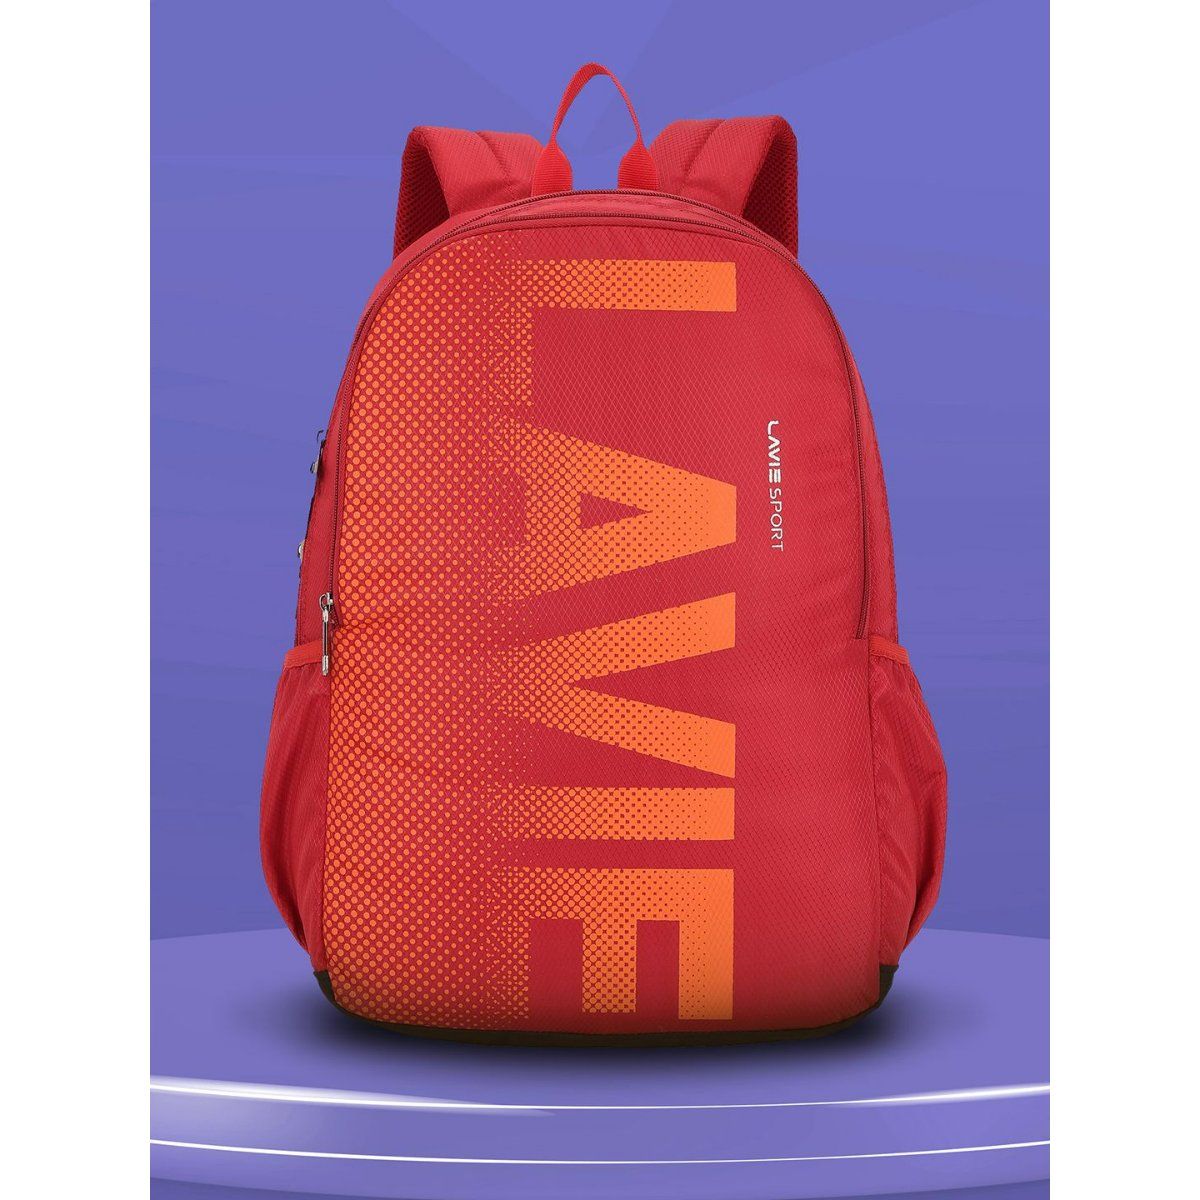 Buy Lavie Women's Tomen Laptop Bag | Ladies Purse Handbag at Amazon.in